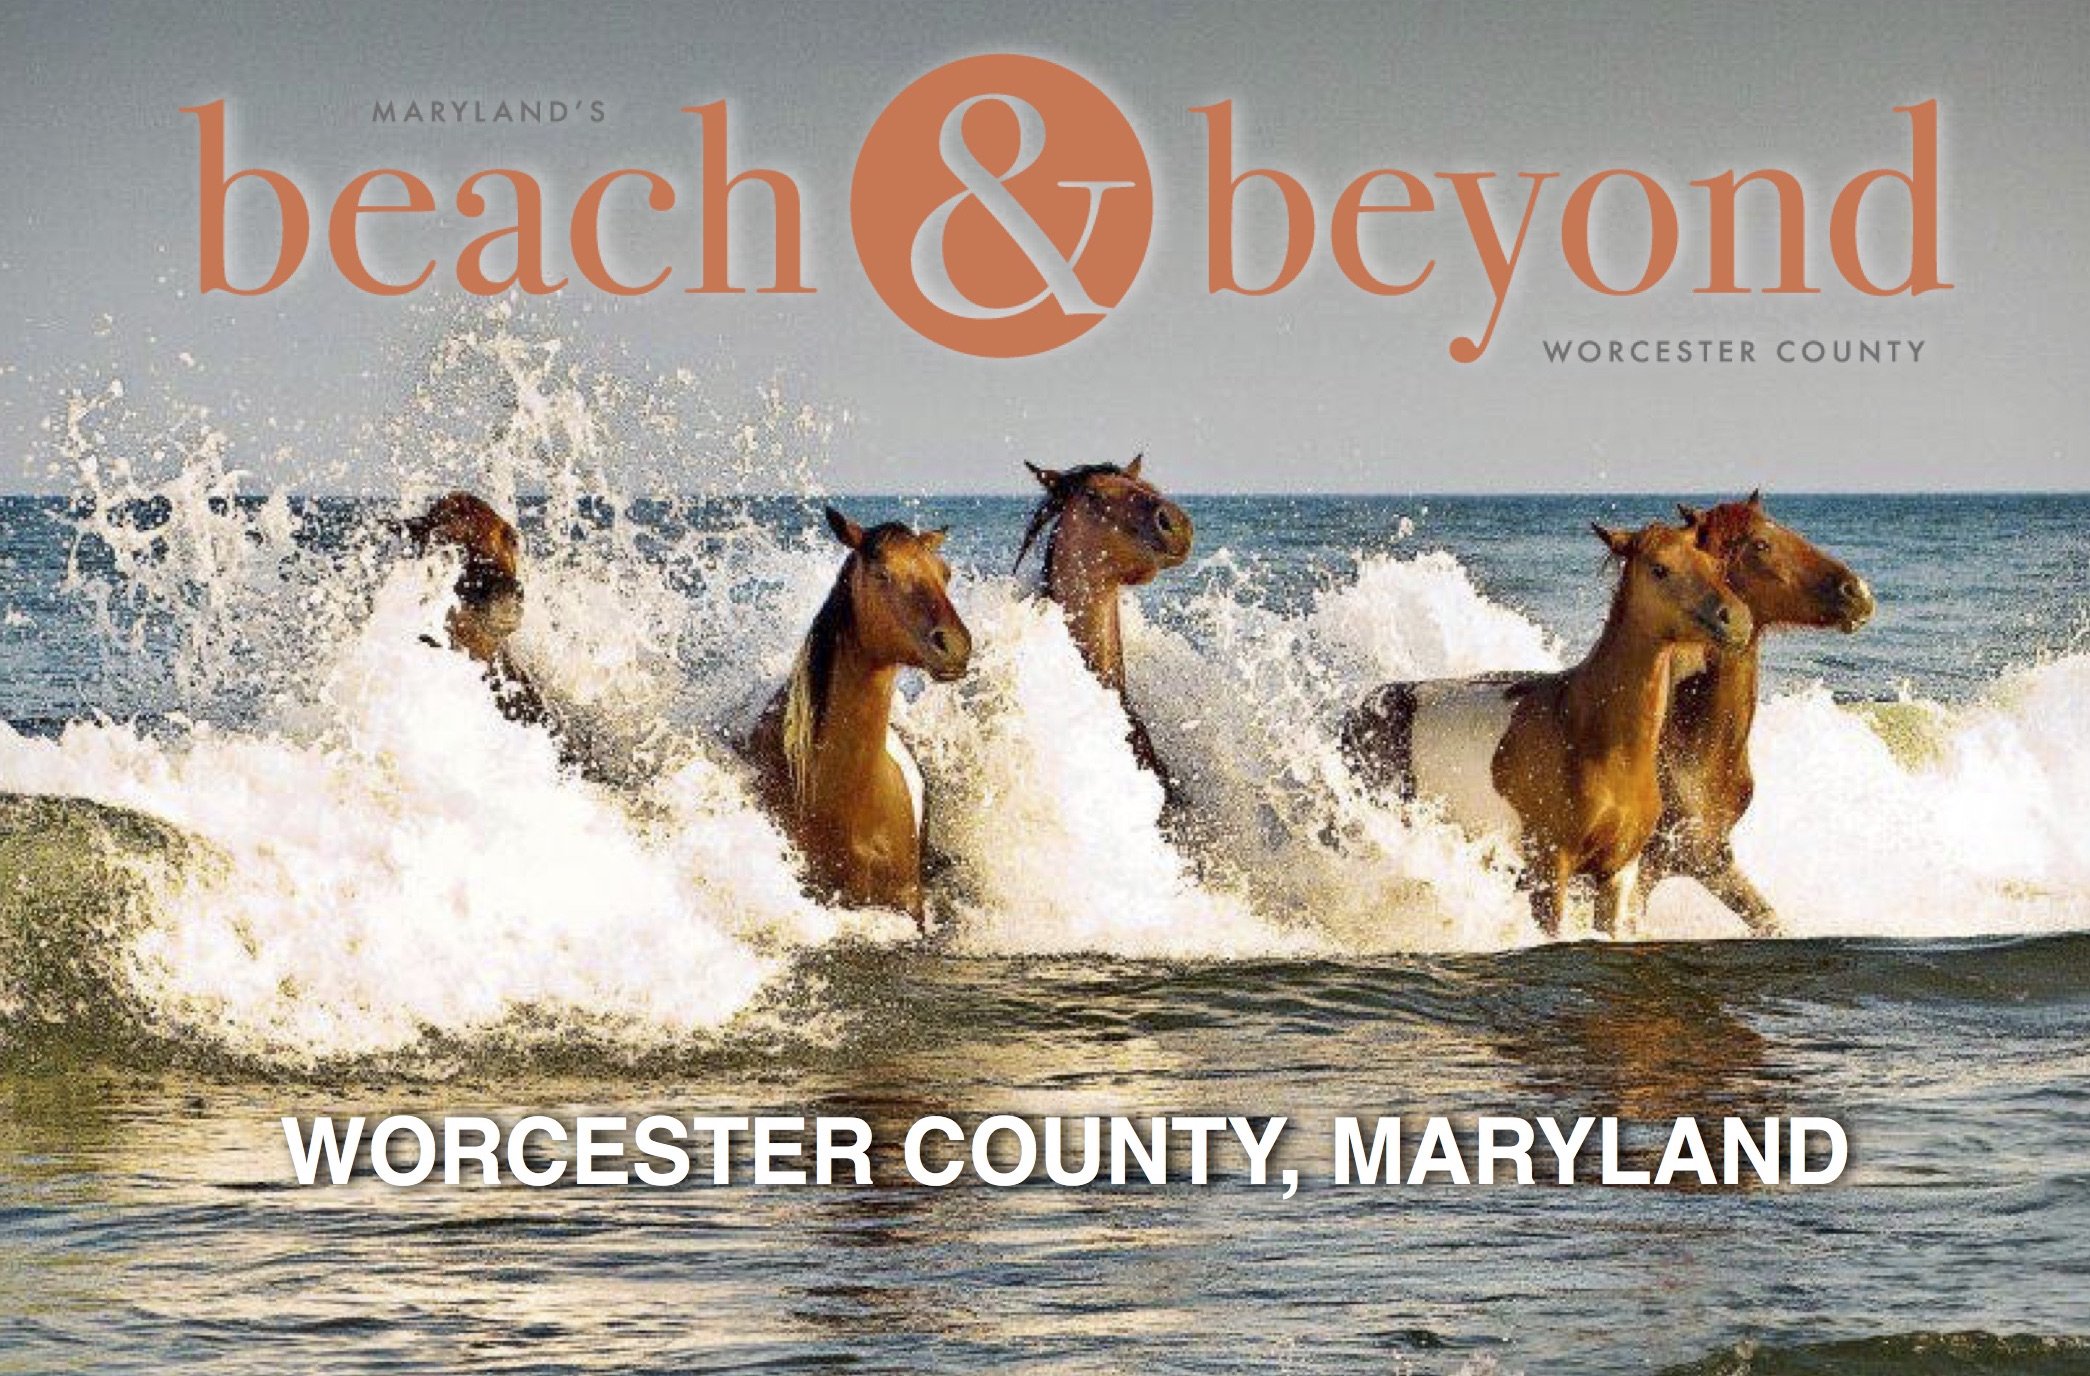 Maryland’s Beach & Beyond